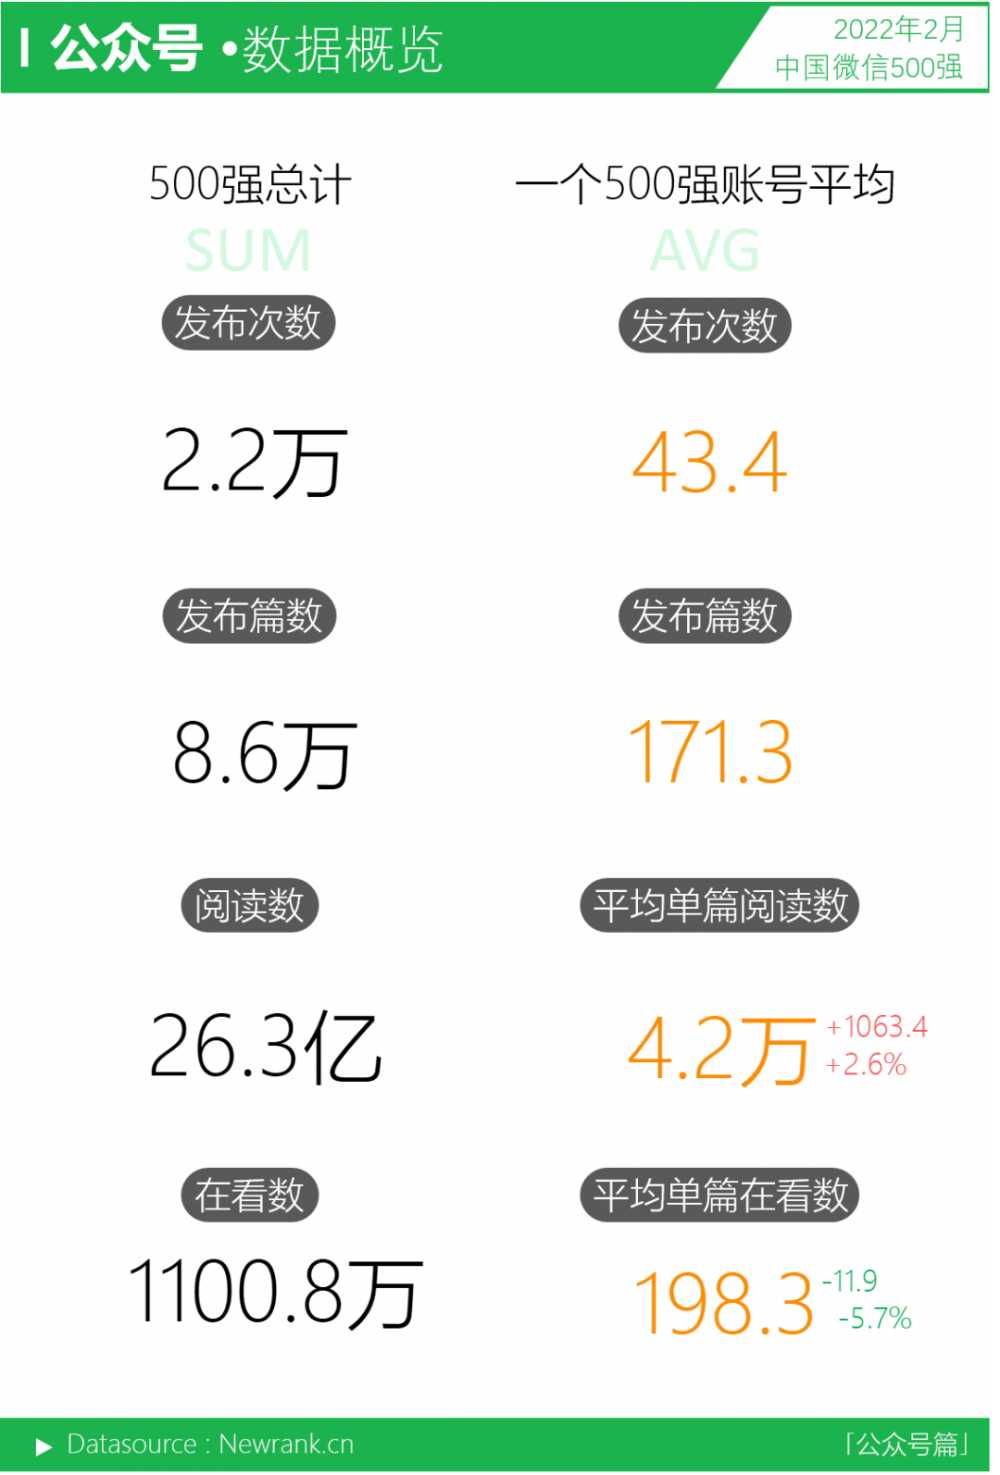 <a href='https://www.zhouxiaohui.cn
' target='_blank'><a href='https://www.zhouxiaohui.cn/duanshipin/
' target='_blank'>视频号</a></a>TOP10大换员，头部竞争激烈； | 中国微信500强月报（2022.02）-第8张图片-周小辉博客